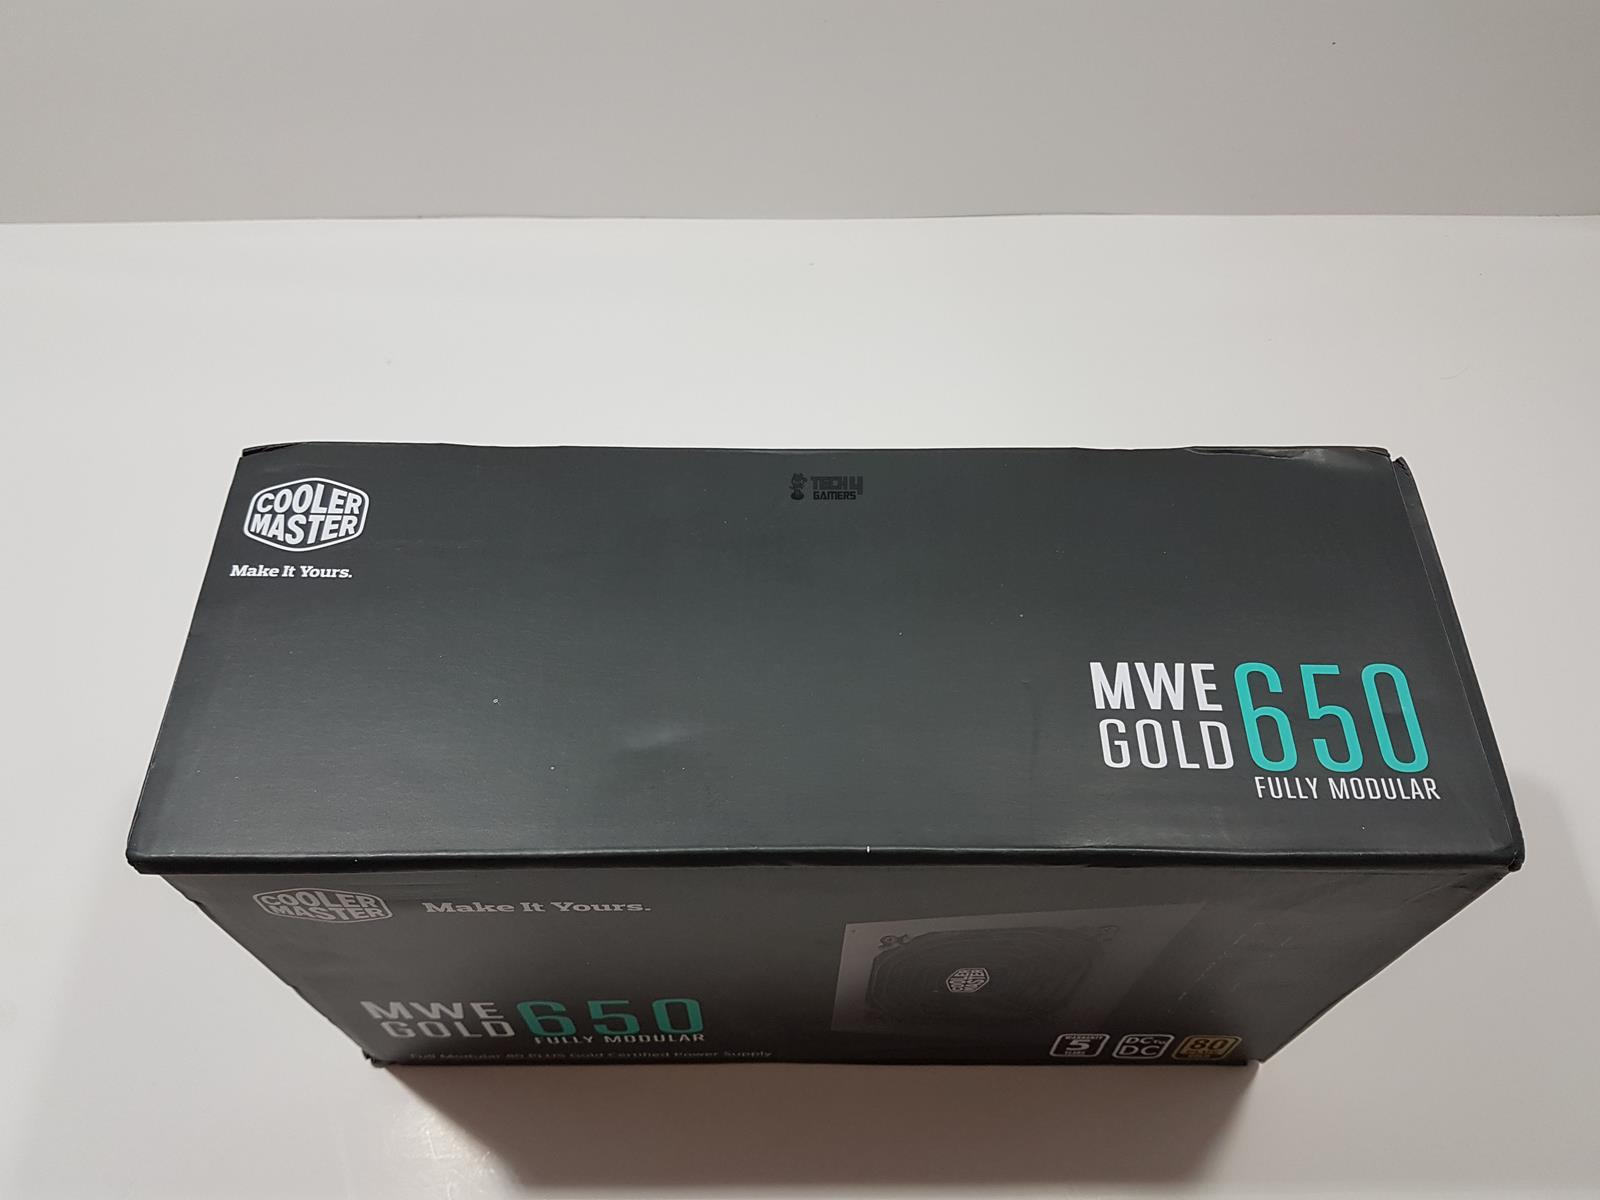 MWE GOLD 650W topside Packaging